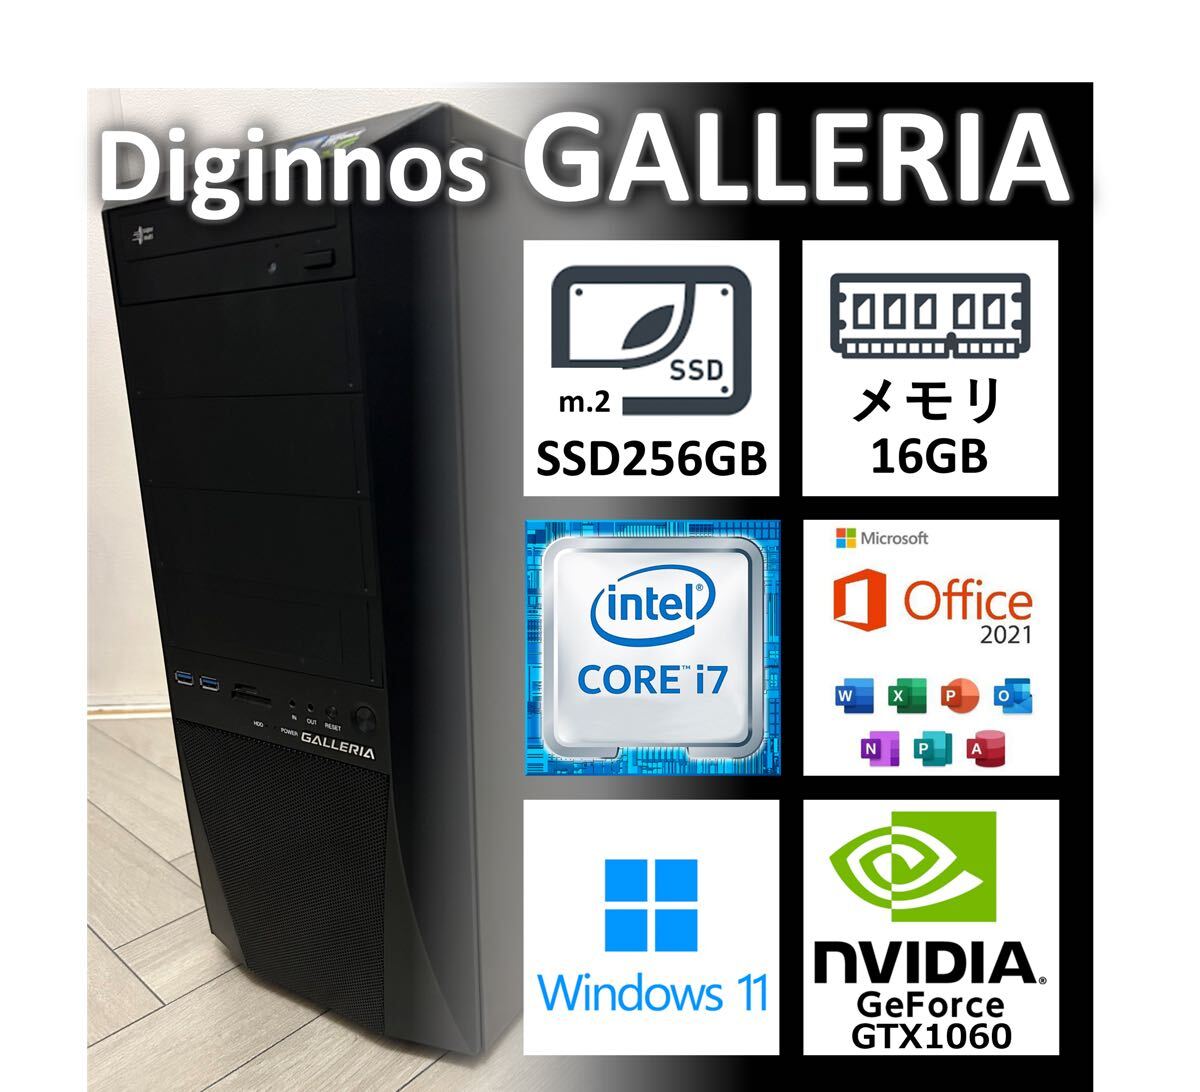 Galleria ゲーミングPC Core i7-6700 m.2 SSD 256G GeForce GTX1060 デスクトップ HDD 2TB Diginnos メモリ16G Office 2021 windows 11の画像1